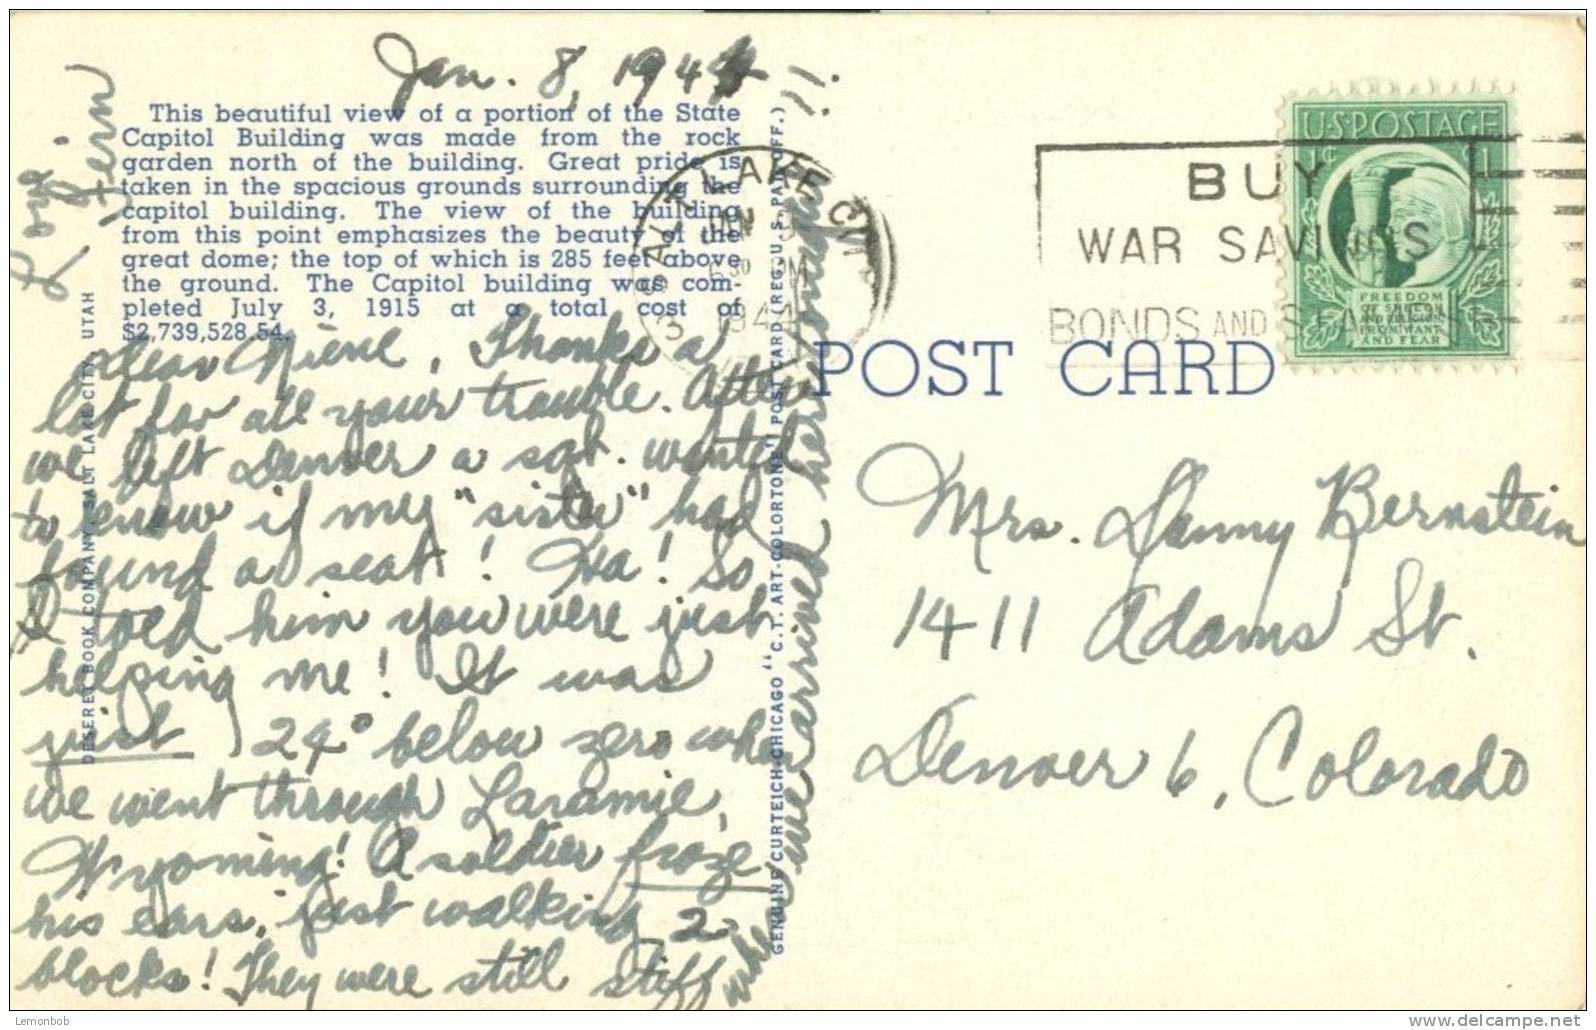 USA – United States – Capitol Dome From Rock Garden, Salt Lake City, Utah, 1944 Used Postcard [P4674] - Salt Lake City